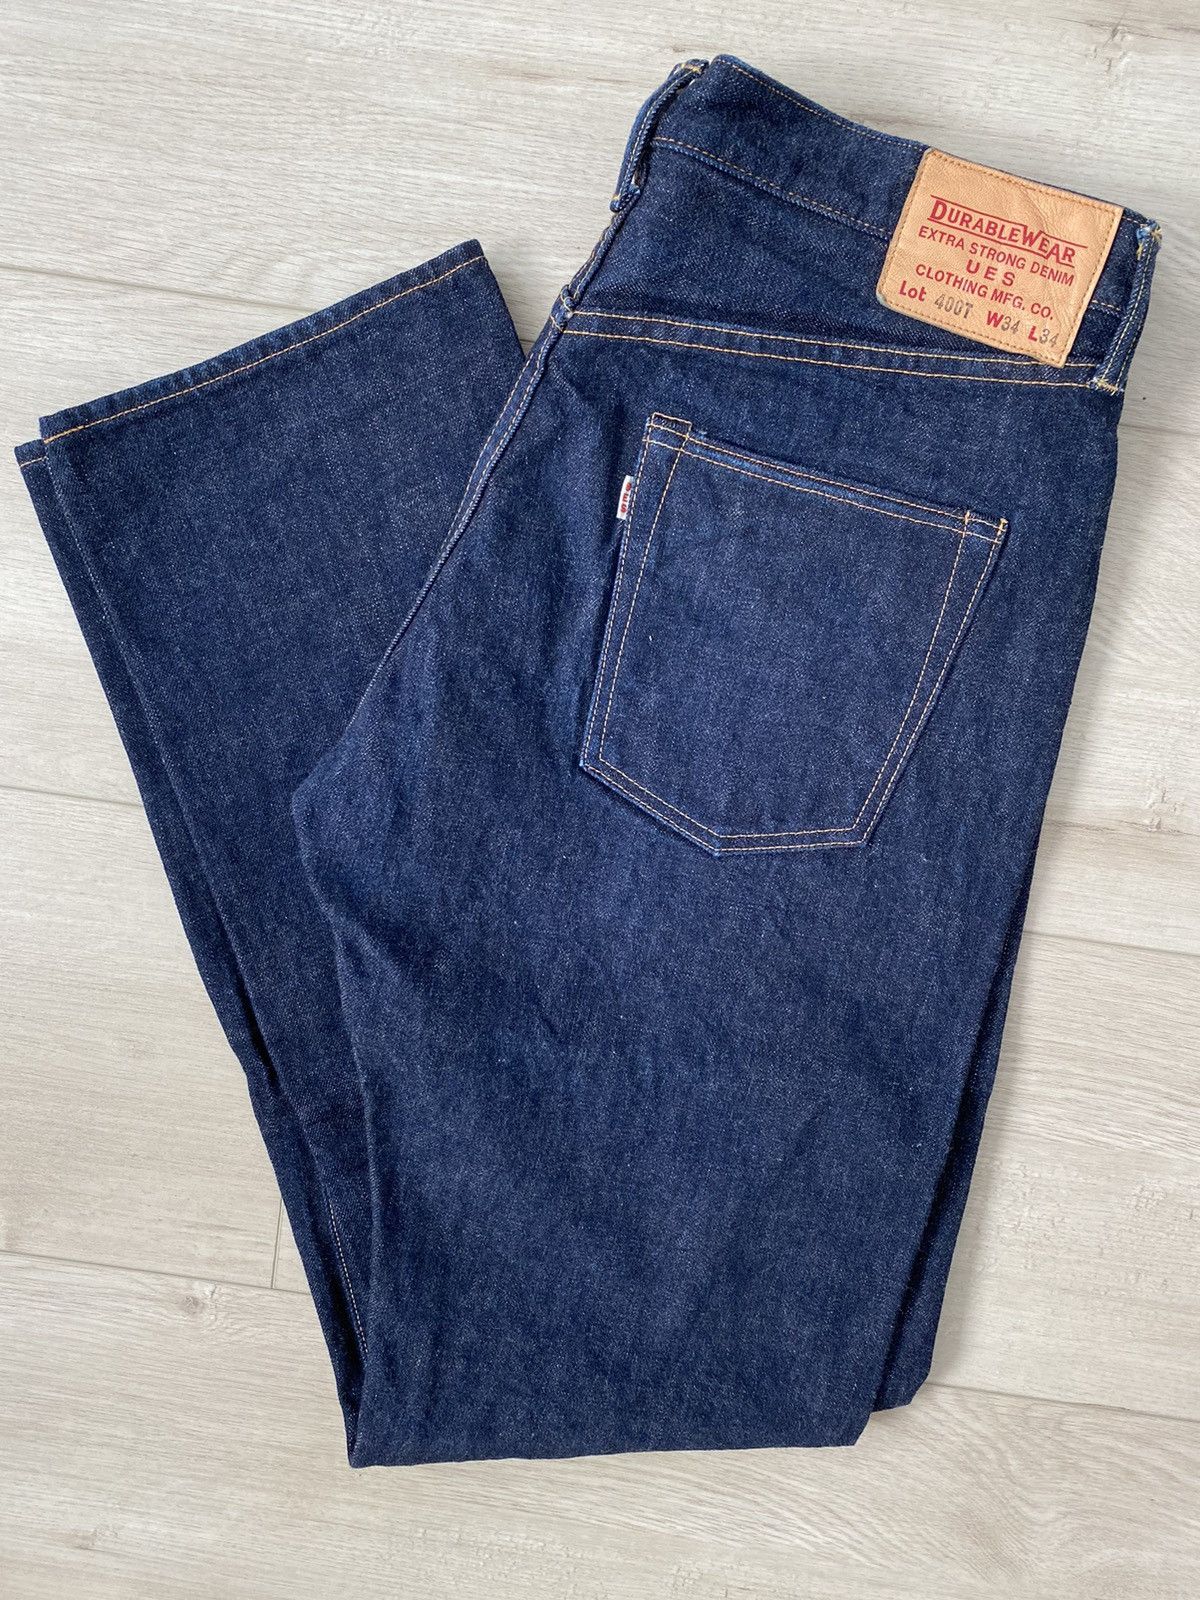 Ues Japan UES 400t Japanese Selvedge Denim Jeans Made in Japan | Grailed